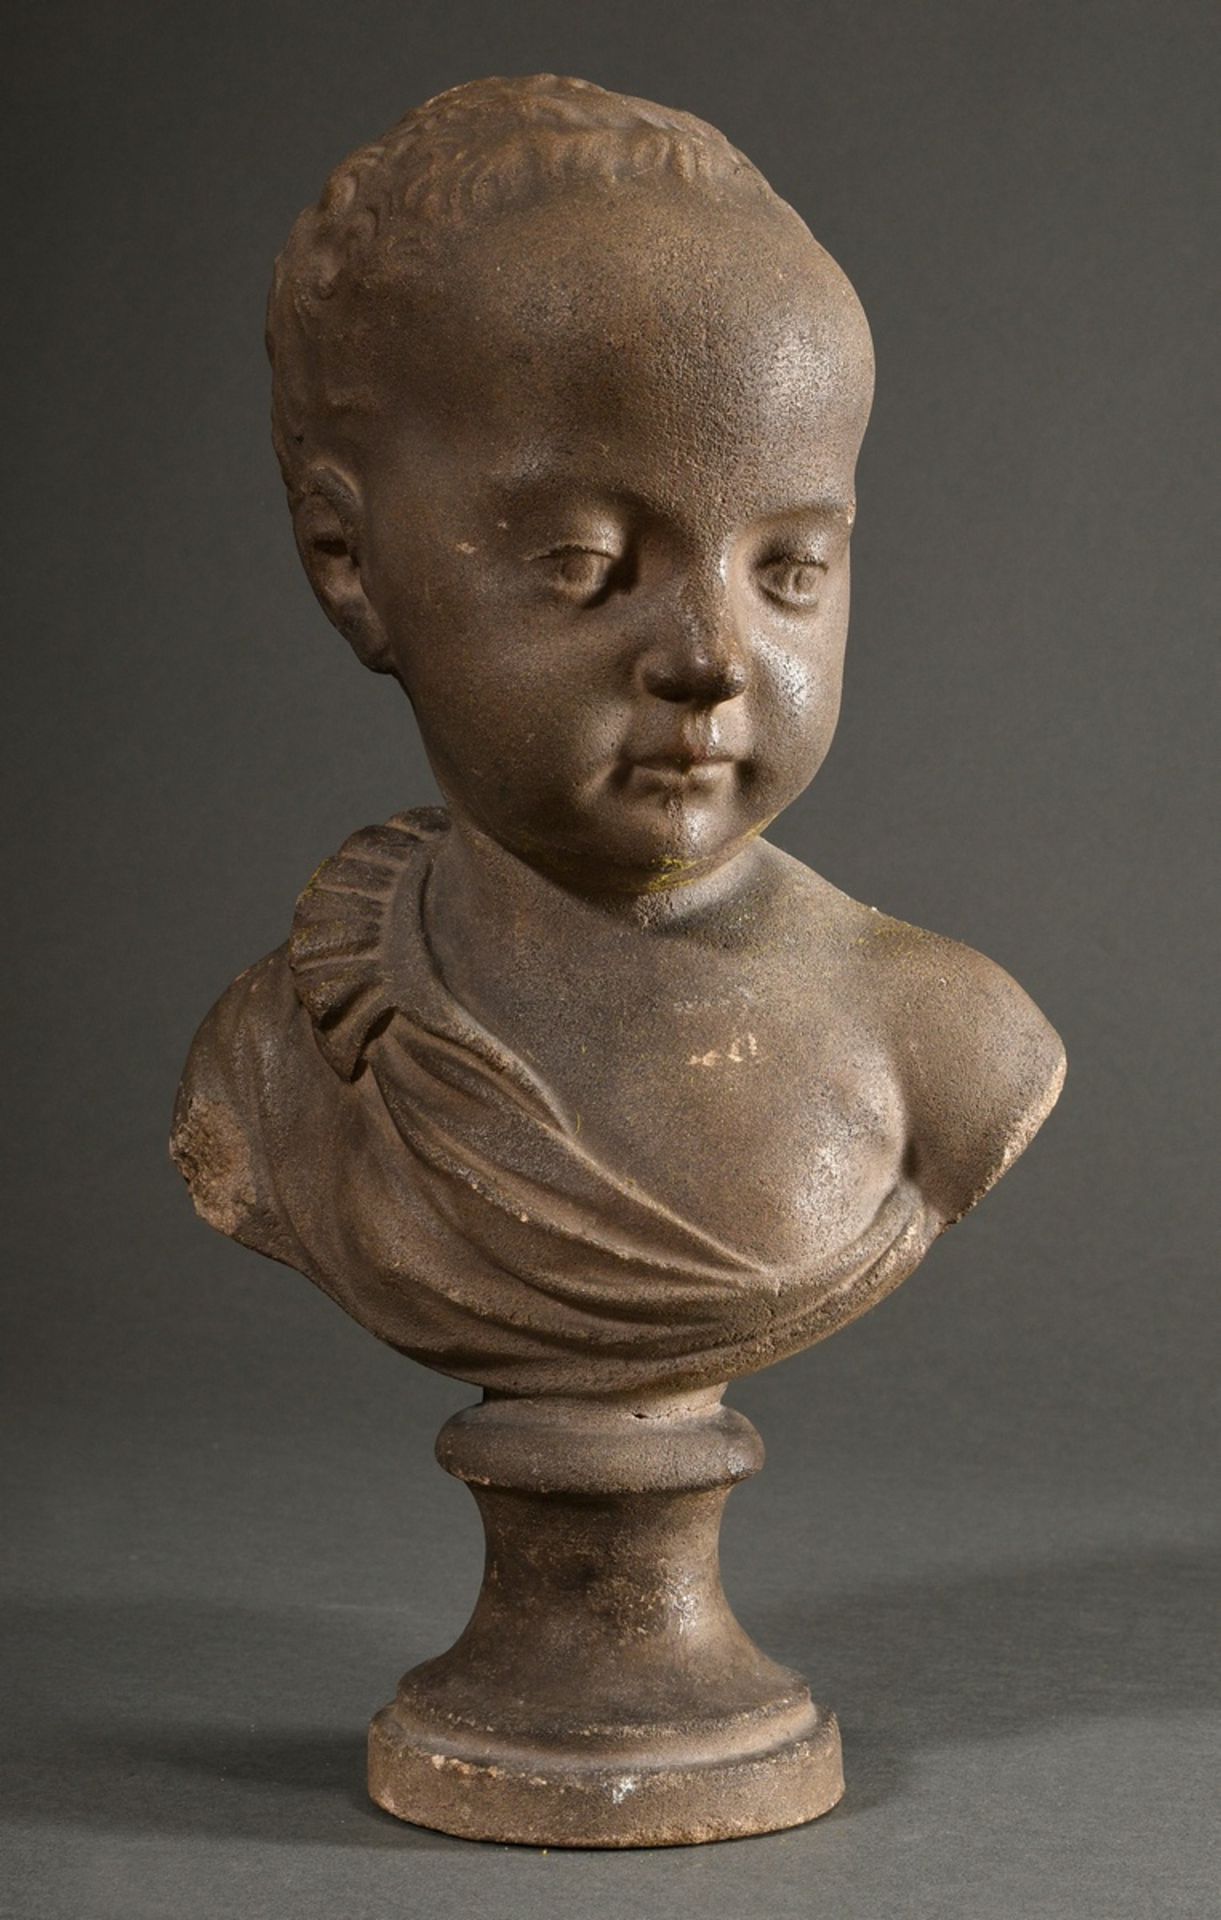 Sandstone bust on round base "King Henry IV of France as a boy" after Germain Pilon (c. 1525-1590),